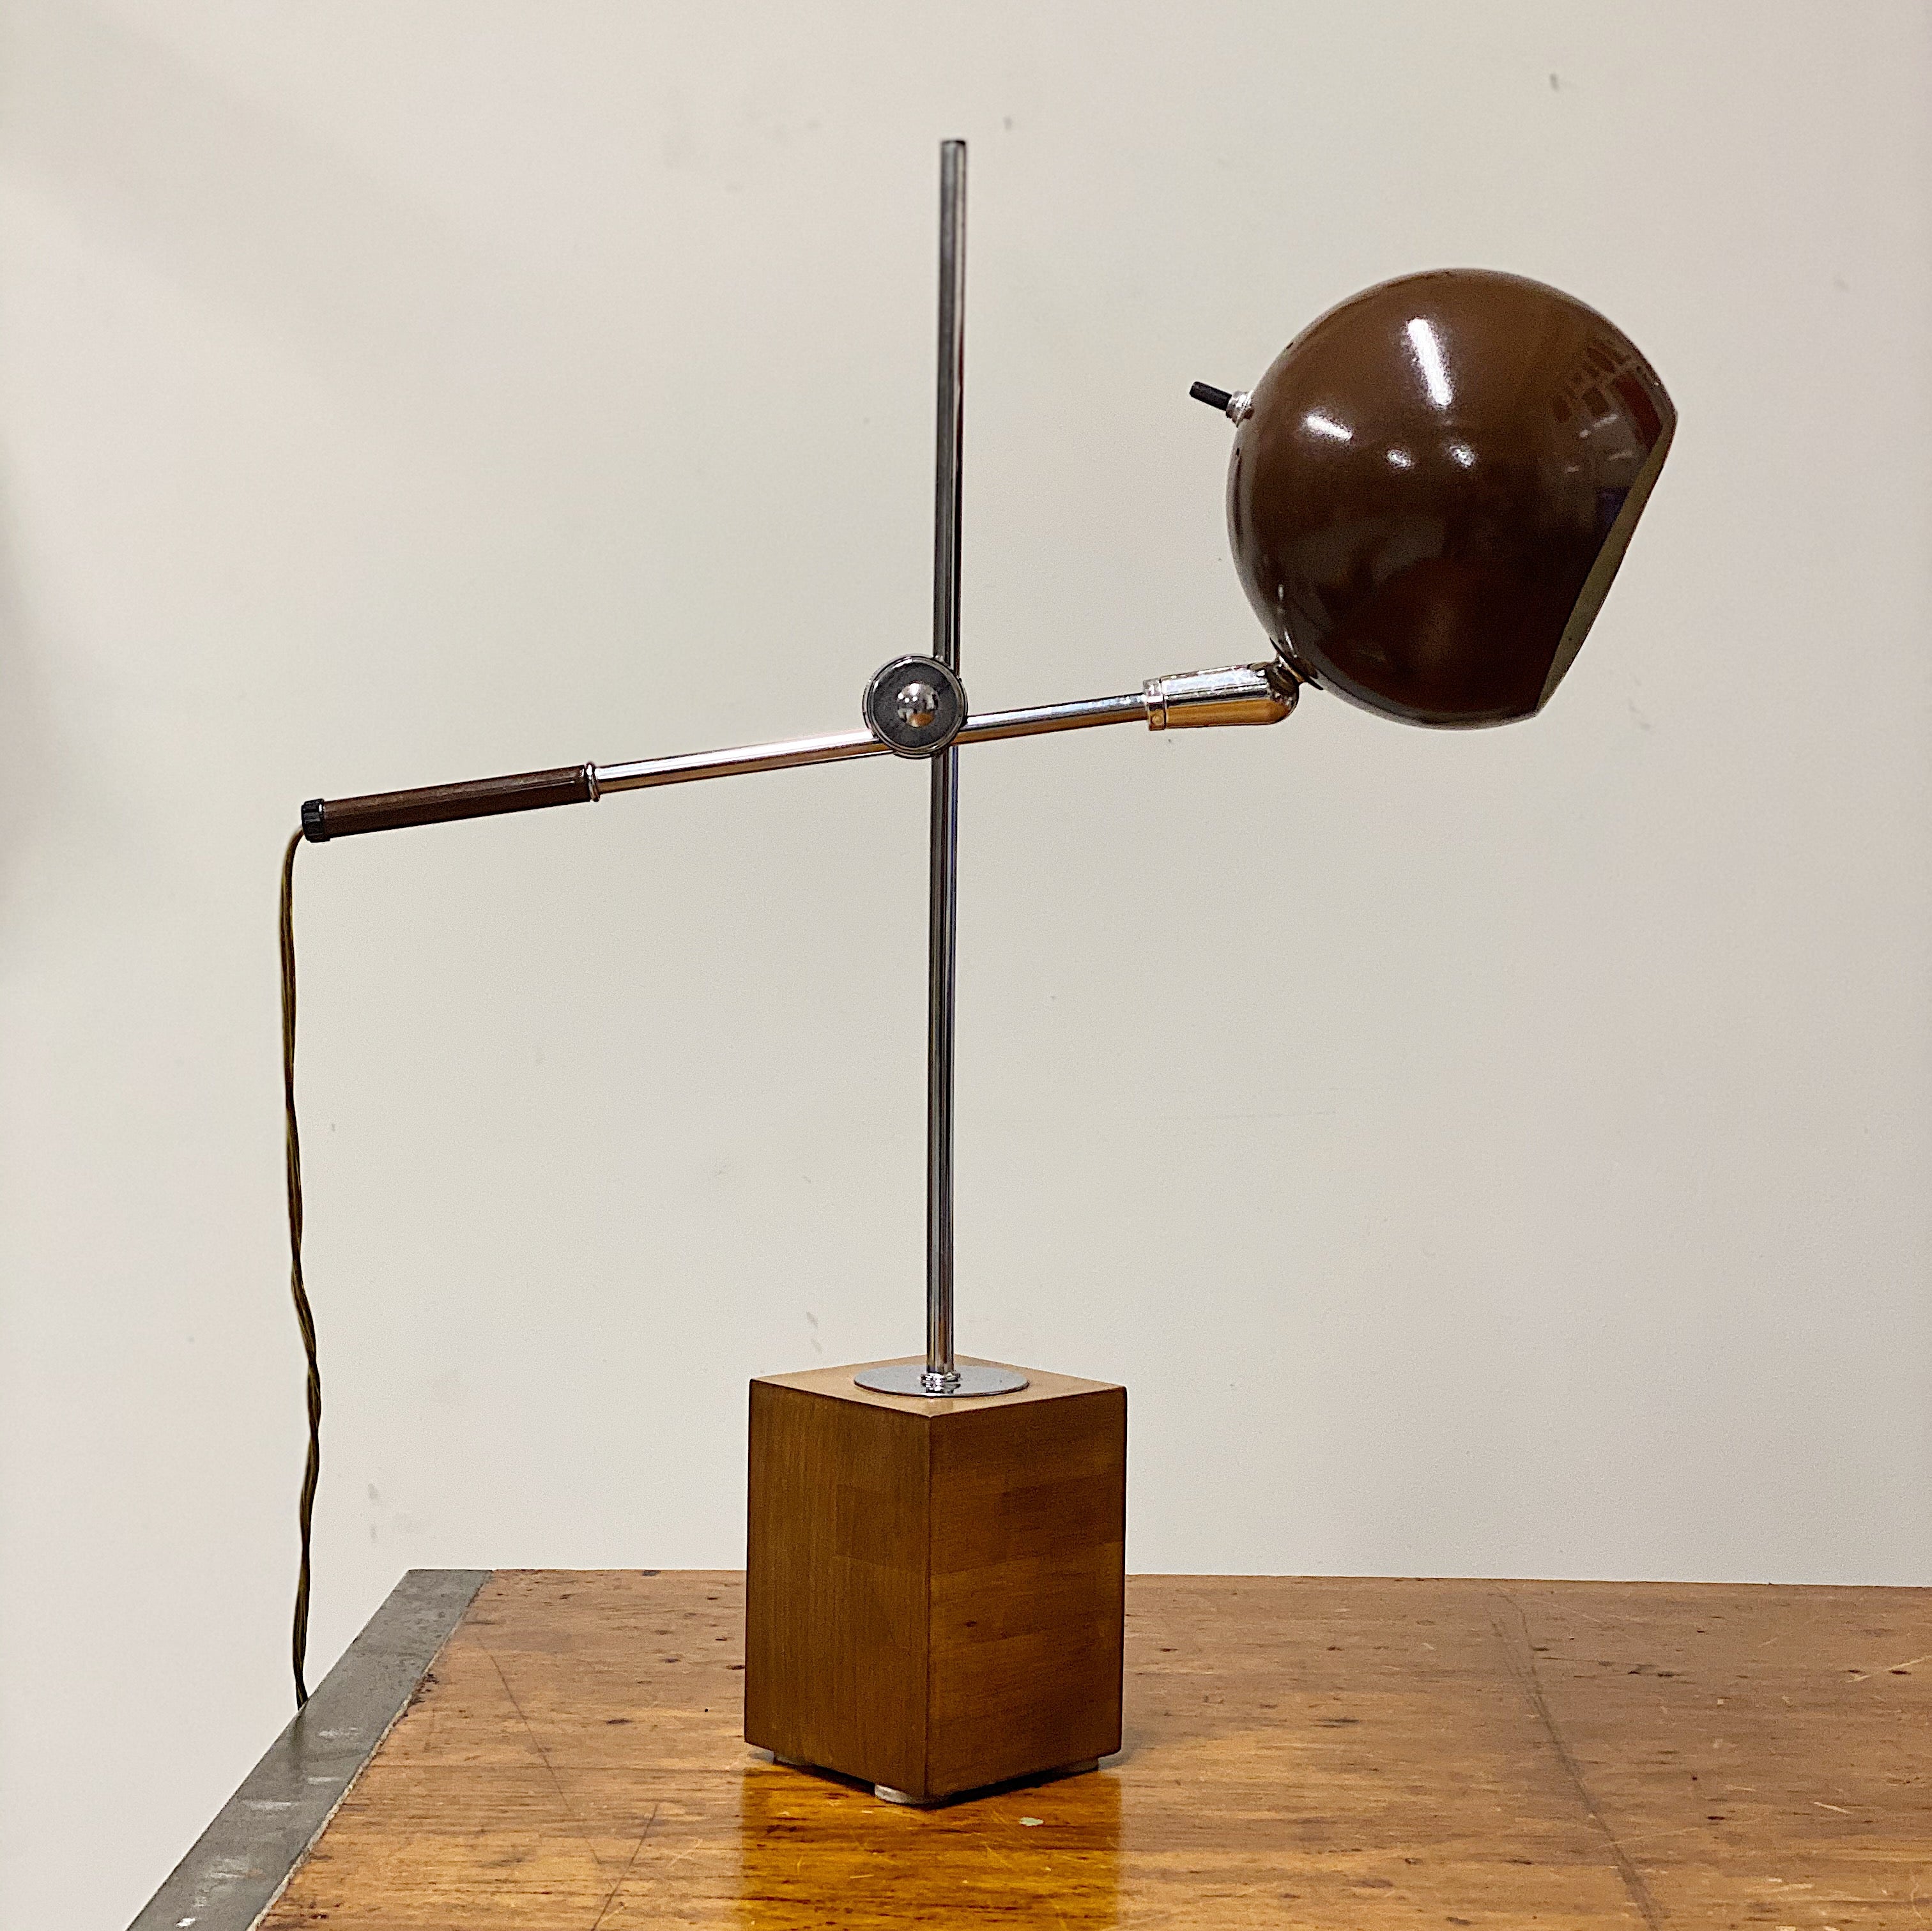 Vintage Eyeball Telescoping Table Lamp - 1950s Space Age Midcentury Modern Light - Rare Atomic Adjustable Orb Lighting - Brown and Chrome